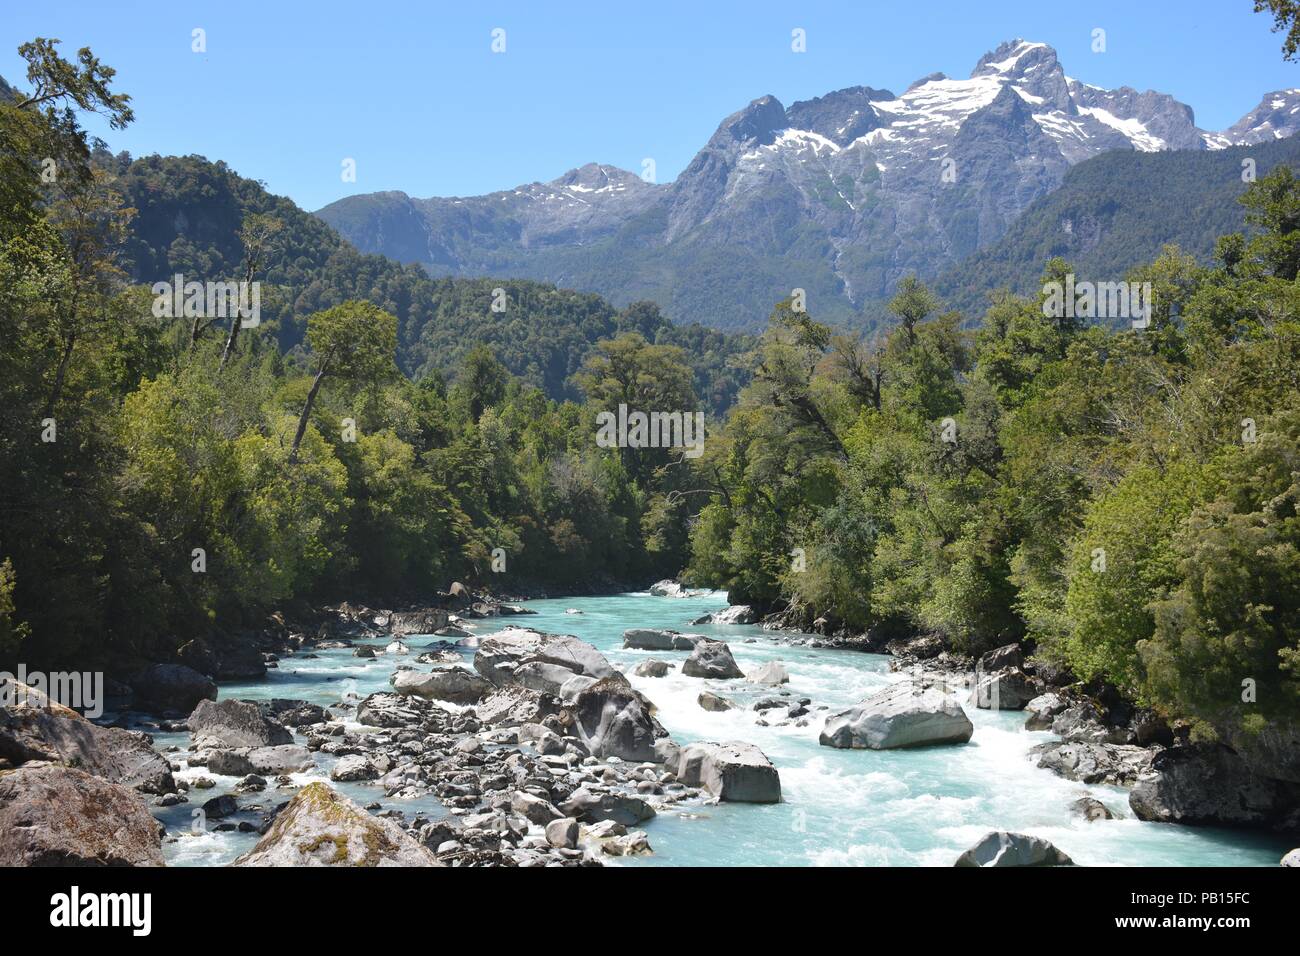 Rio Blanco, Hornopiren, Carretera Austral, Patagonie, Chili Banque D'Images